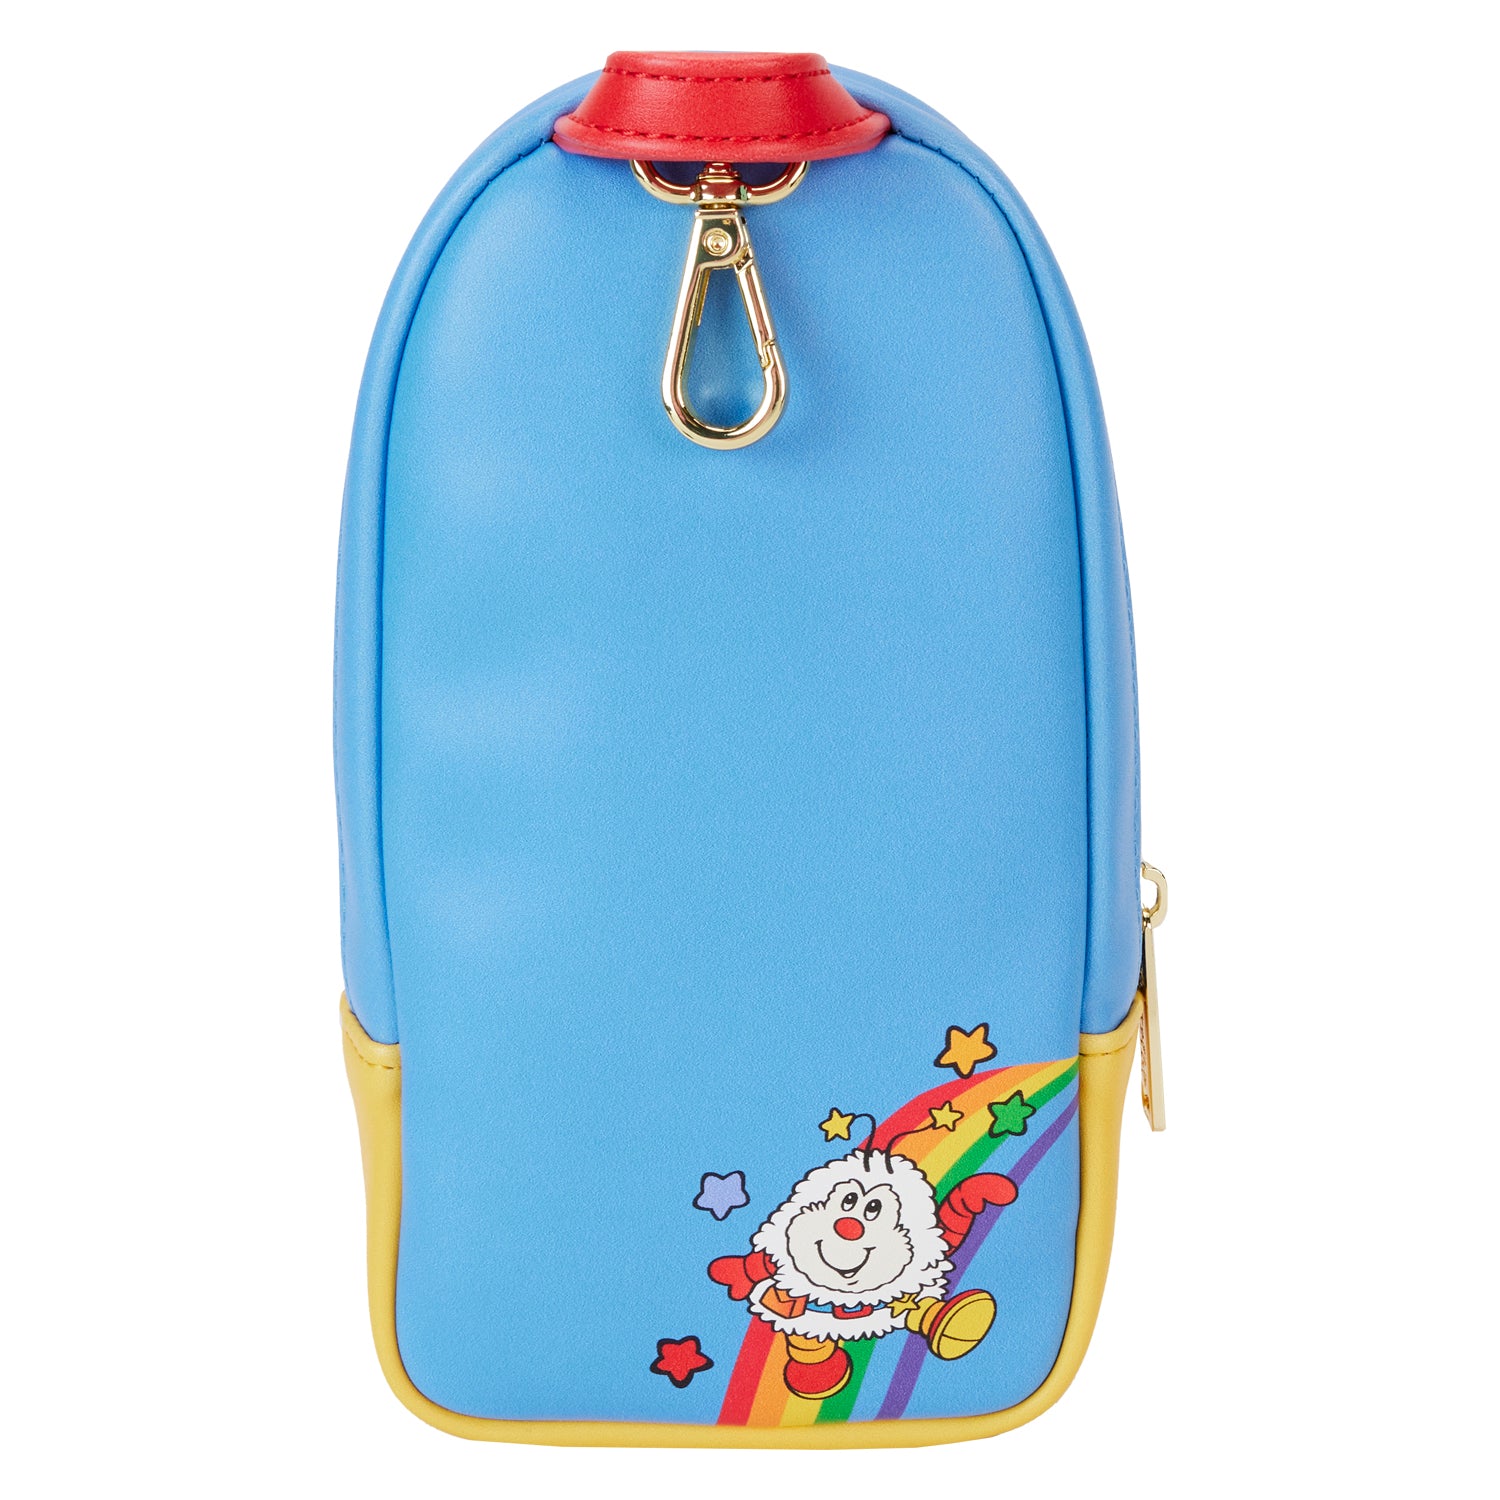 Loungefly x Hallmark Rainbow Brite Castle Mini Backpack Pencil Case